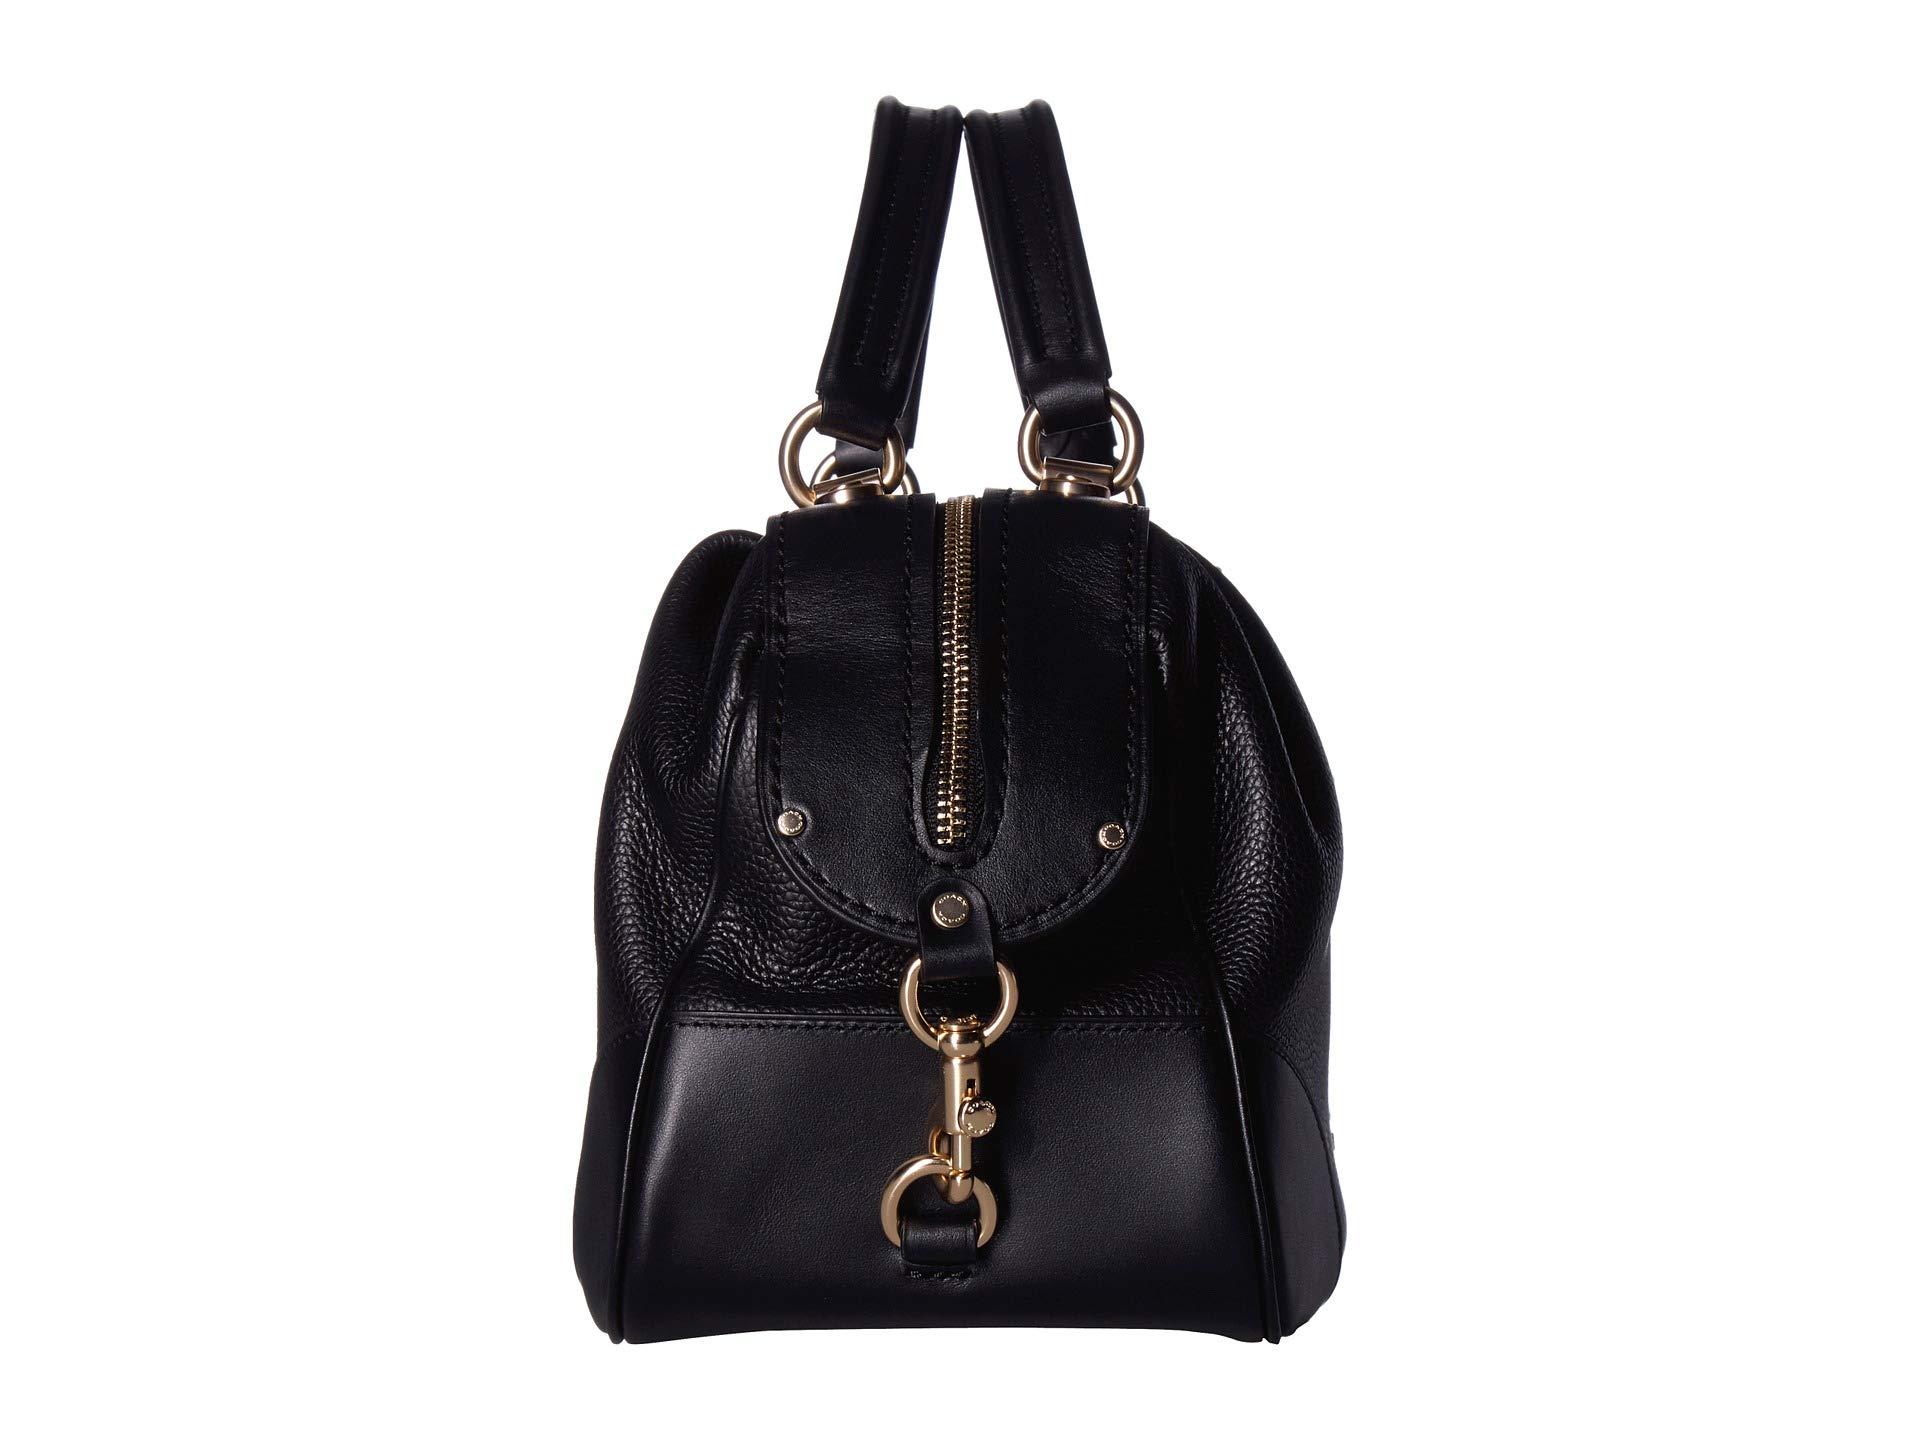 COACH Polished Pebble Leather Lane Satchel (black/gold) Handbags in Black - Lyst